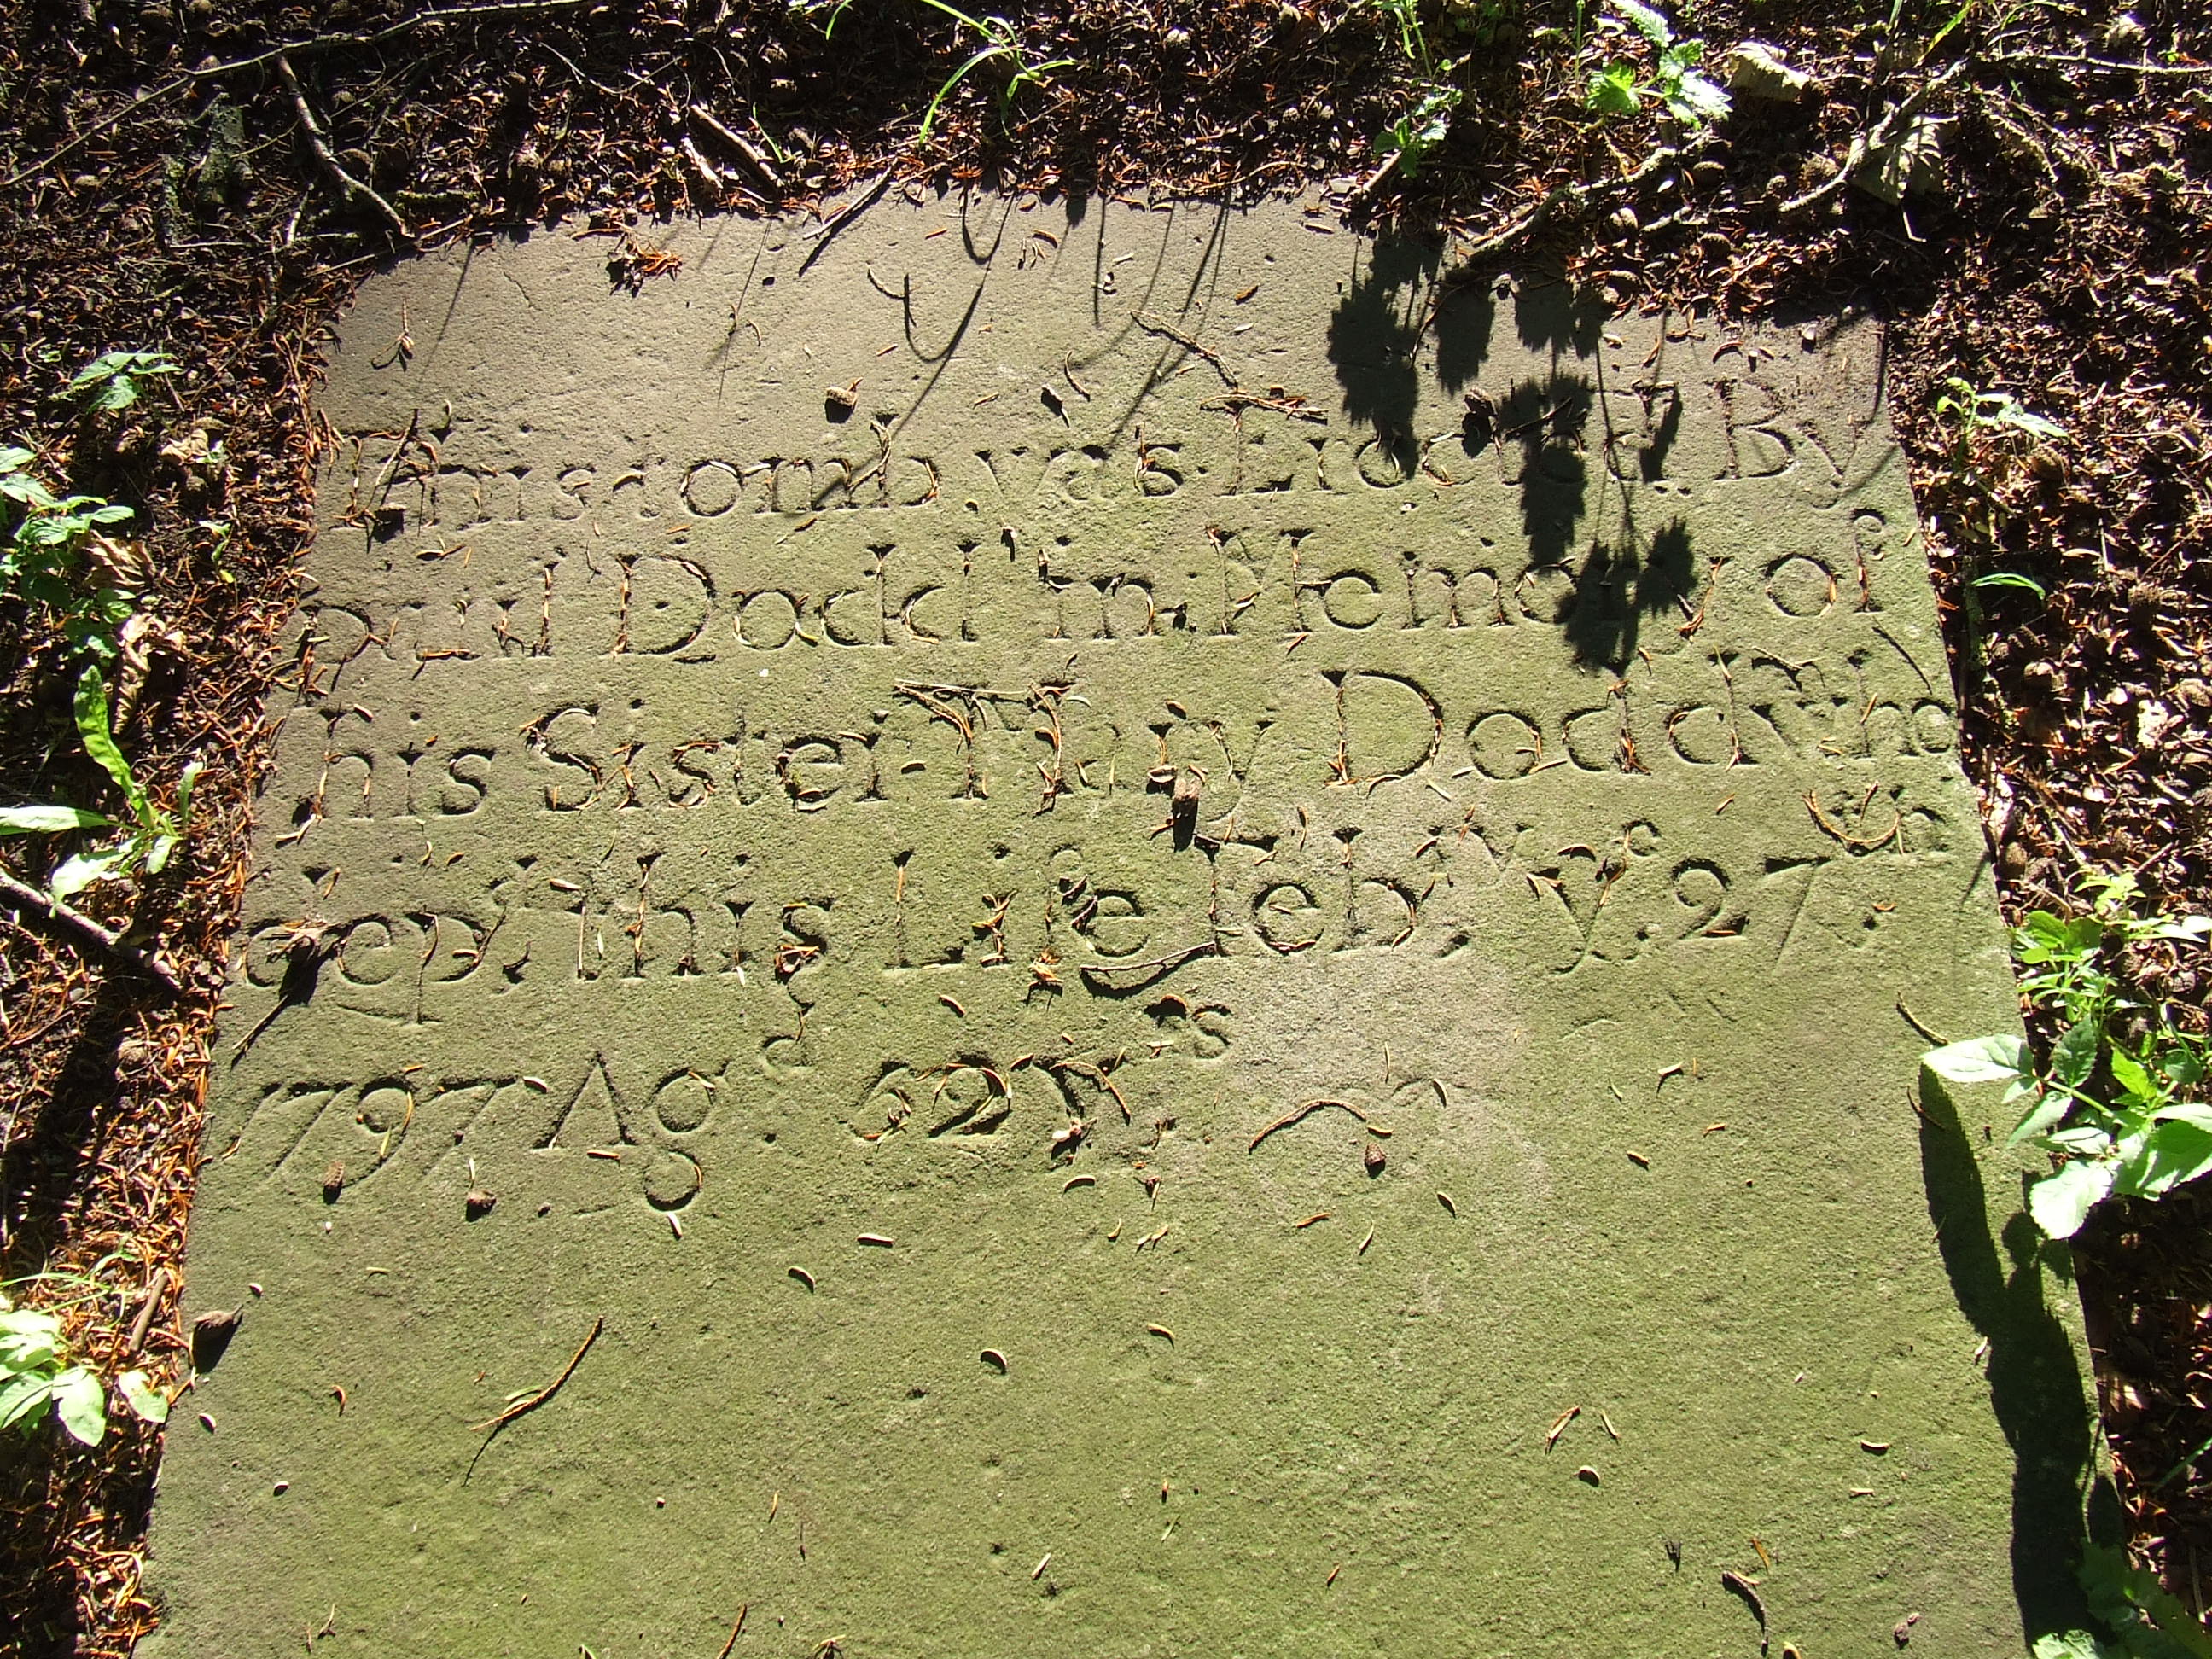 Stories from Portnahinch Co. Laois | Historic Graves Blog